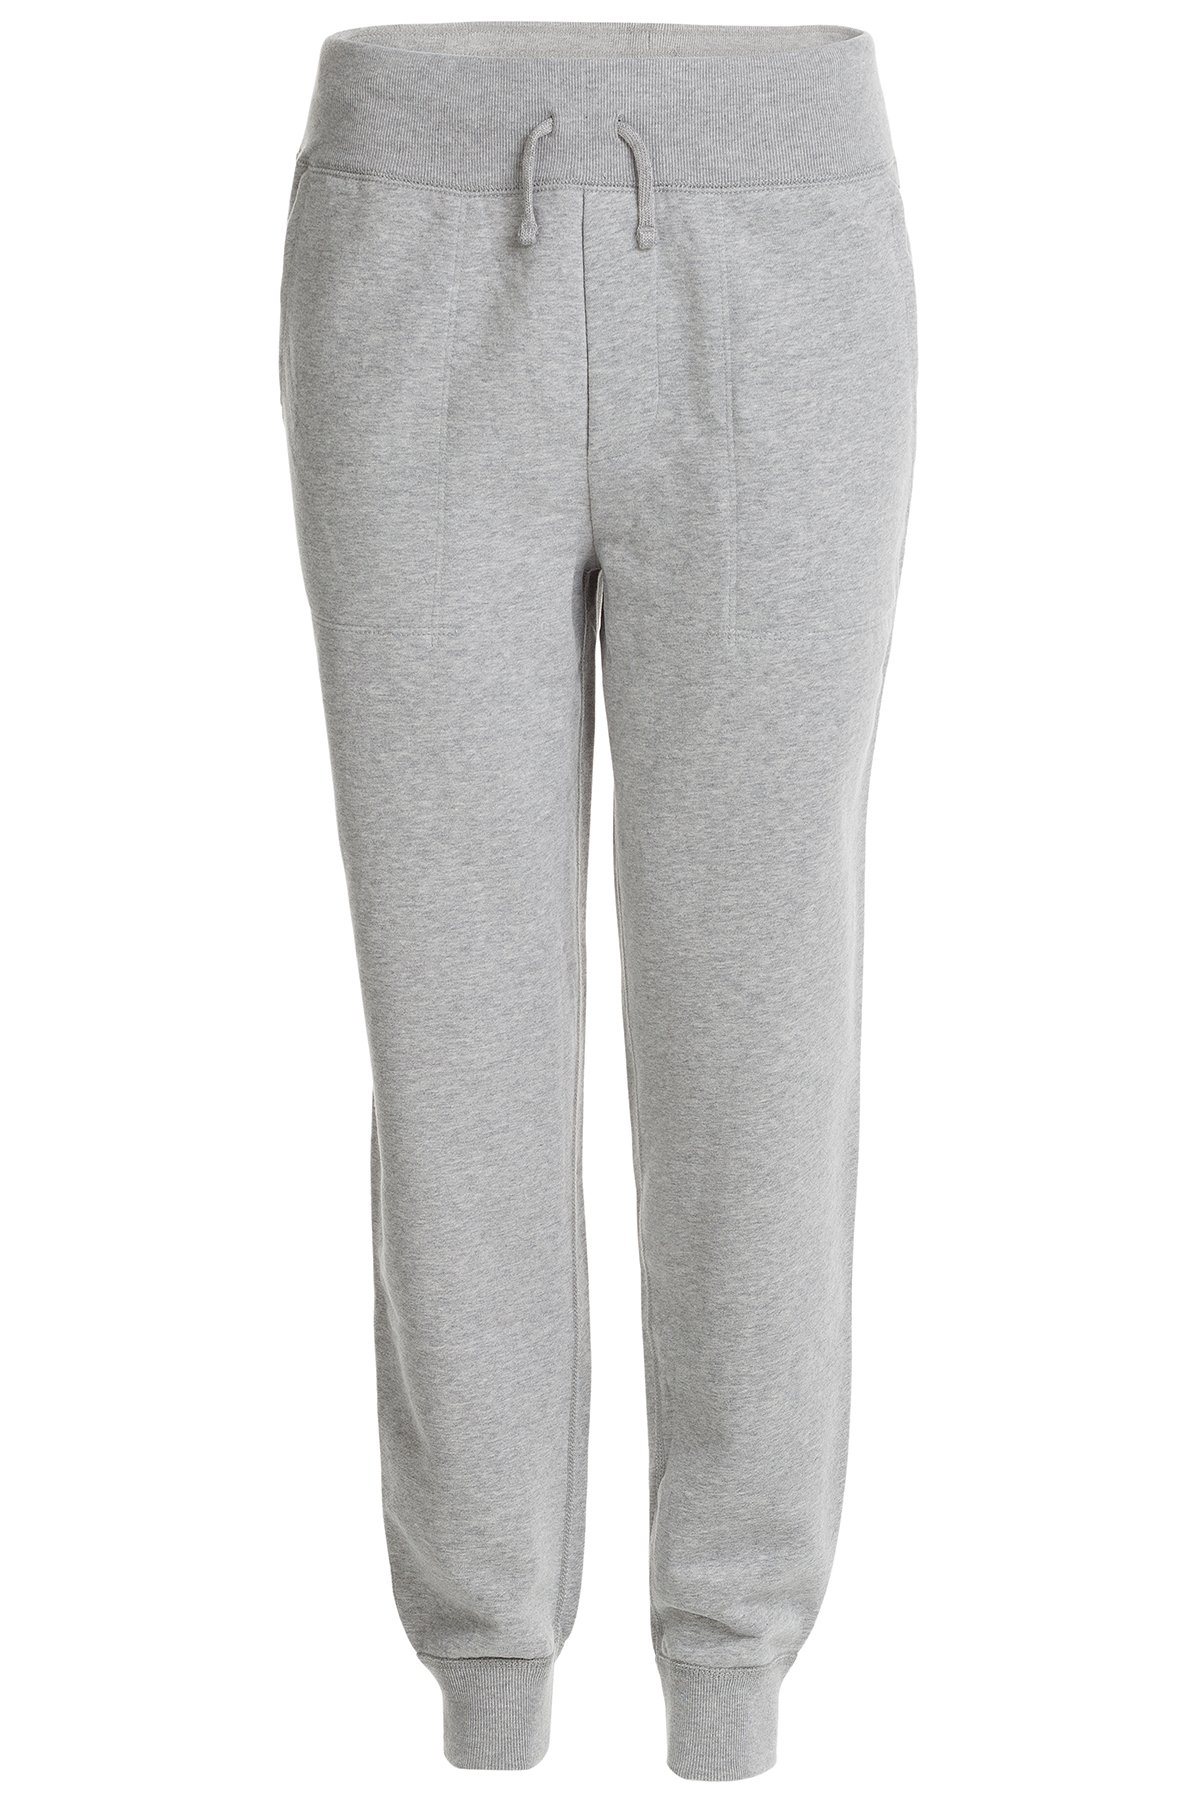 Lyst - Polo Ralph Lauren Cotton Sweatpants - Grey in Gray for Men